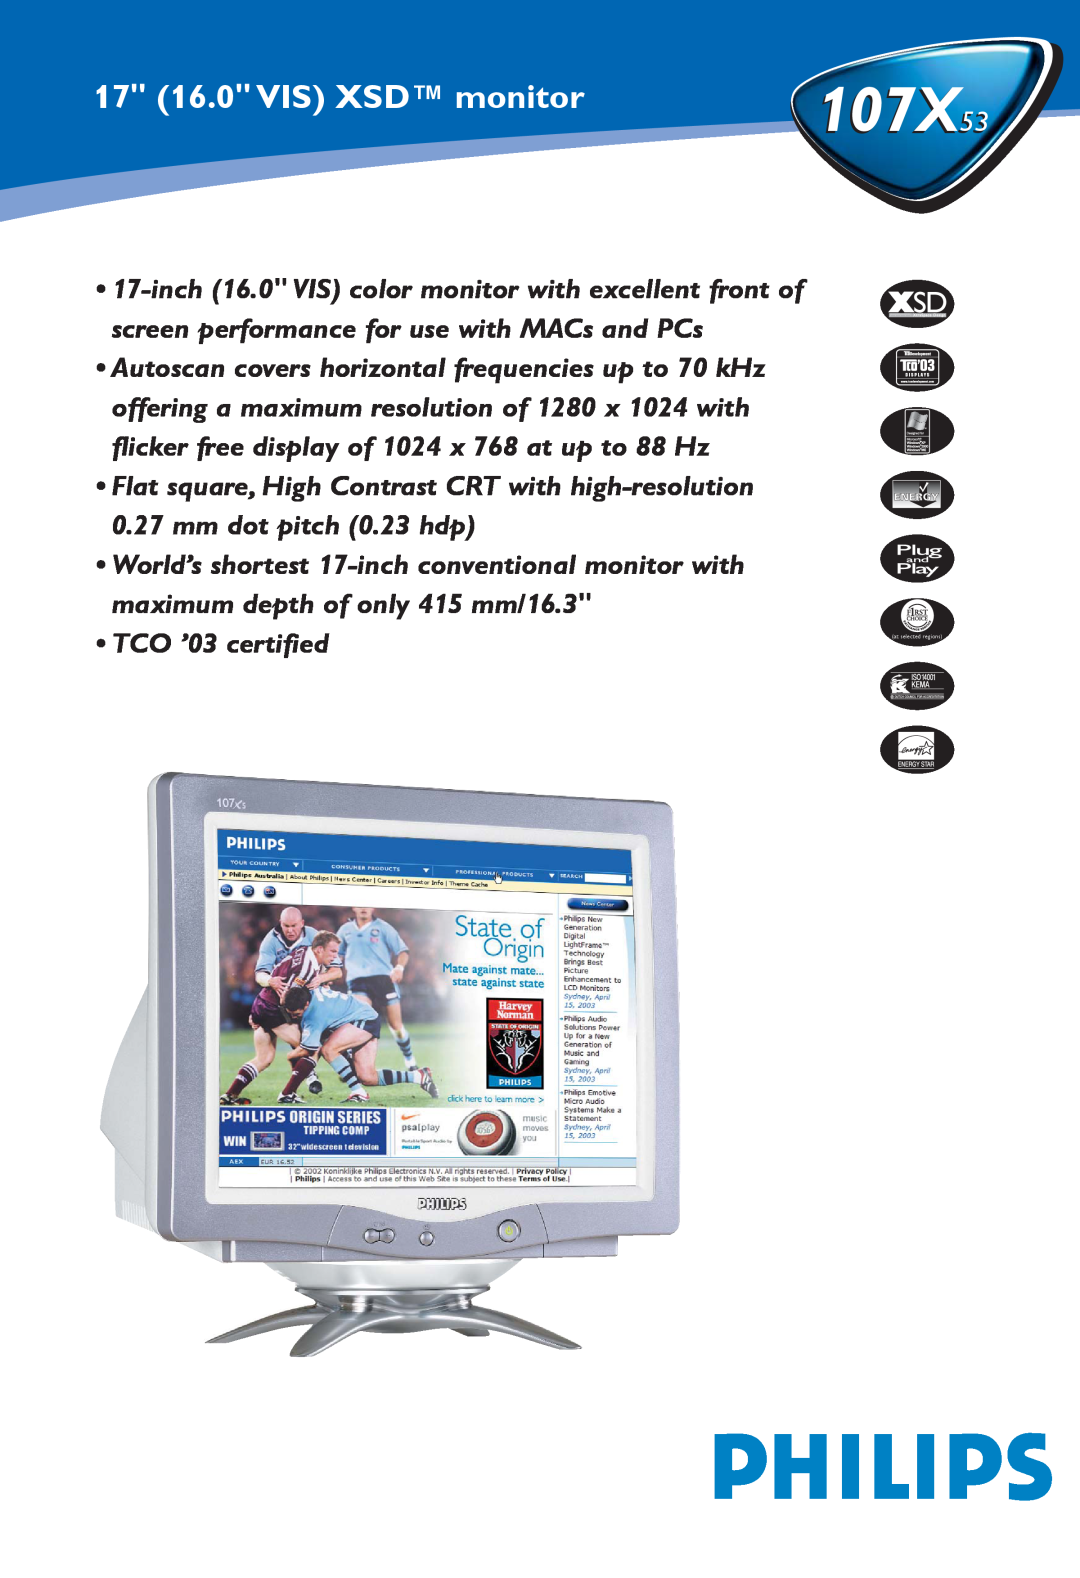 Philips manual 107X53, 17 16.0 VIS XSD monitor 